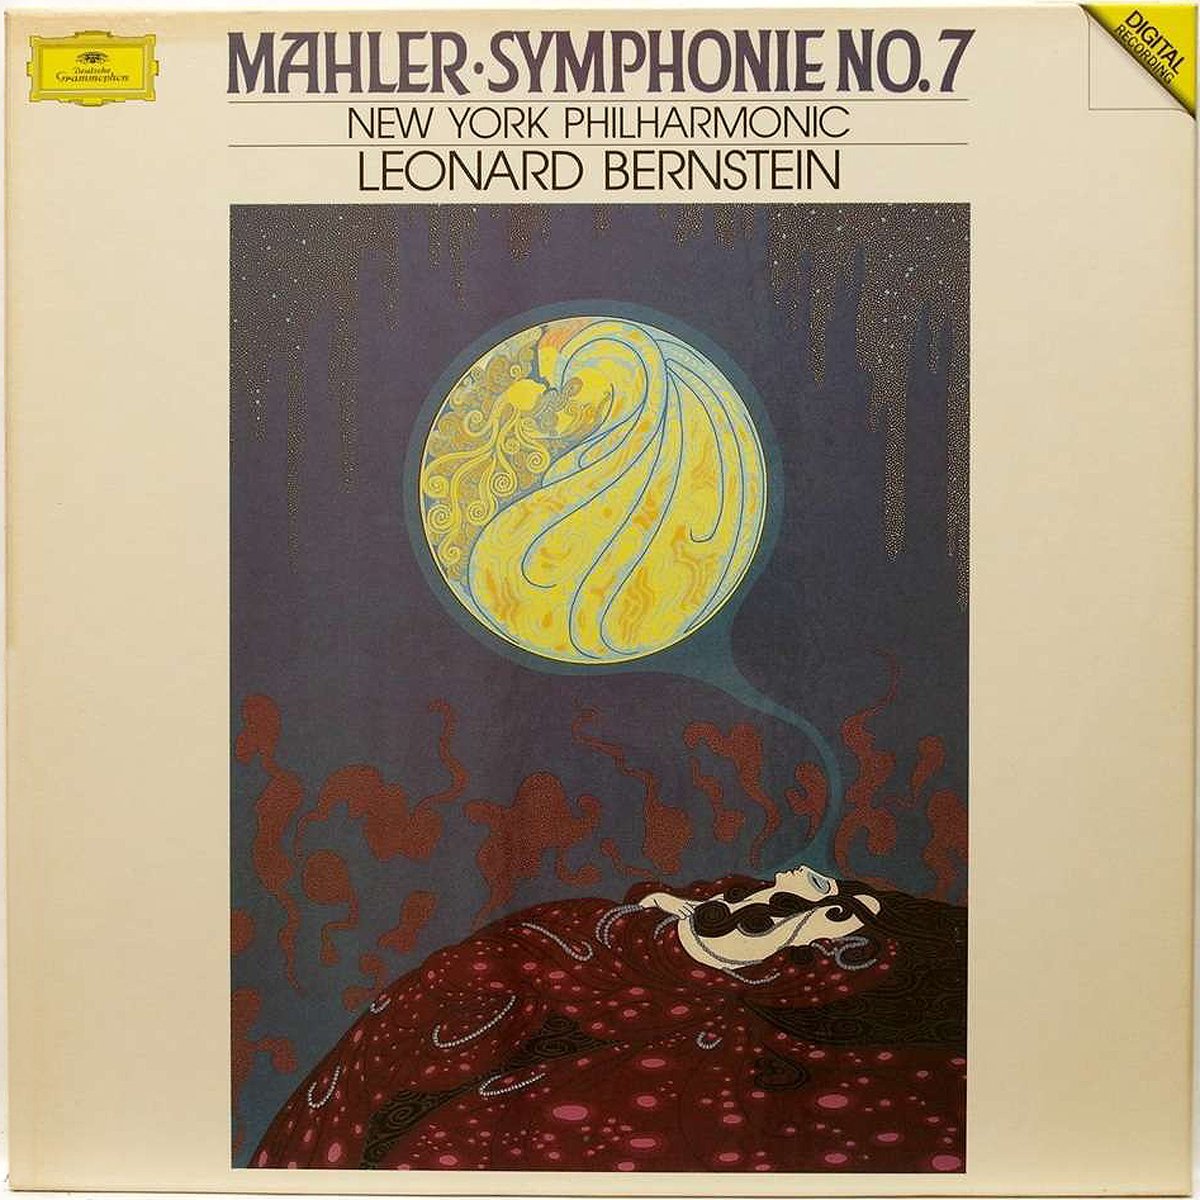 DGG 419 211 Mahler Symphonie 7 Bernstein DGG Digital Aufnahme